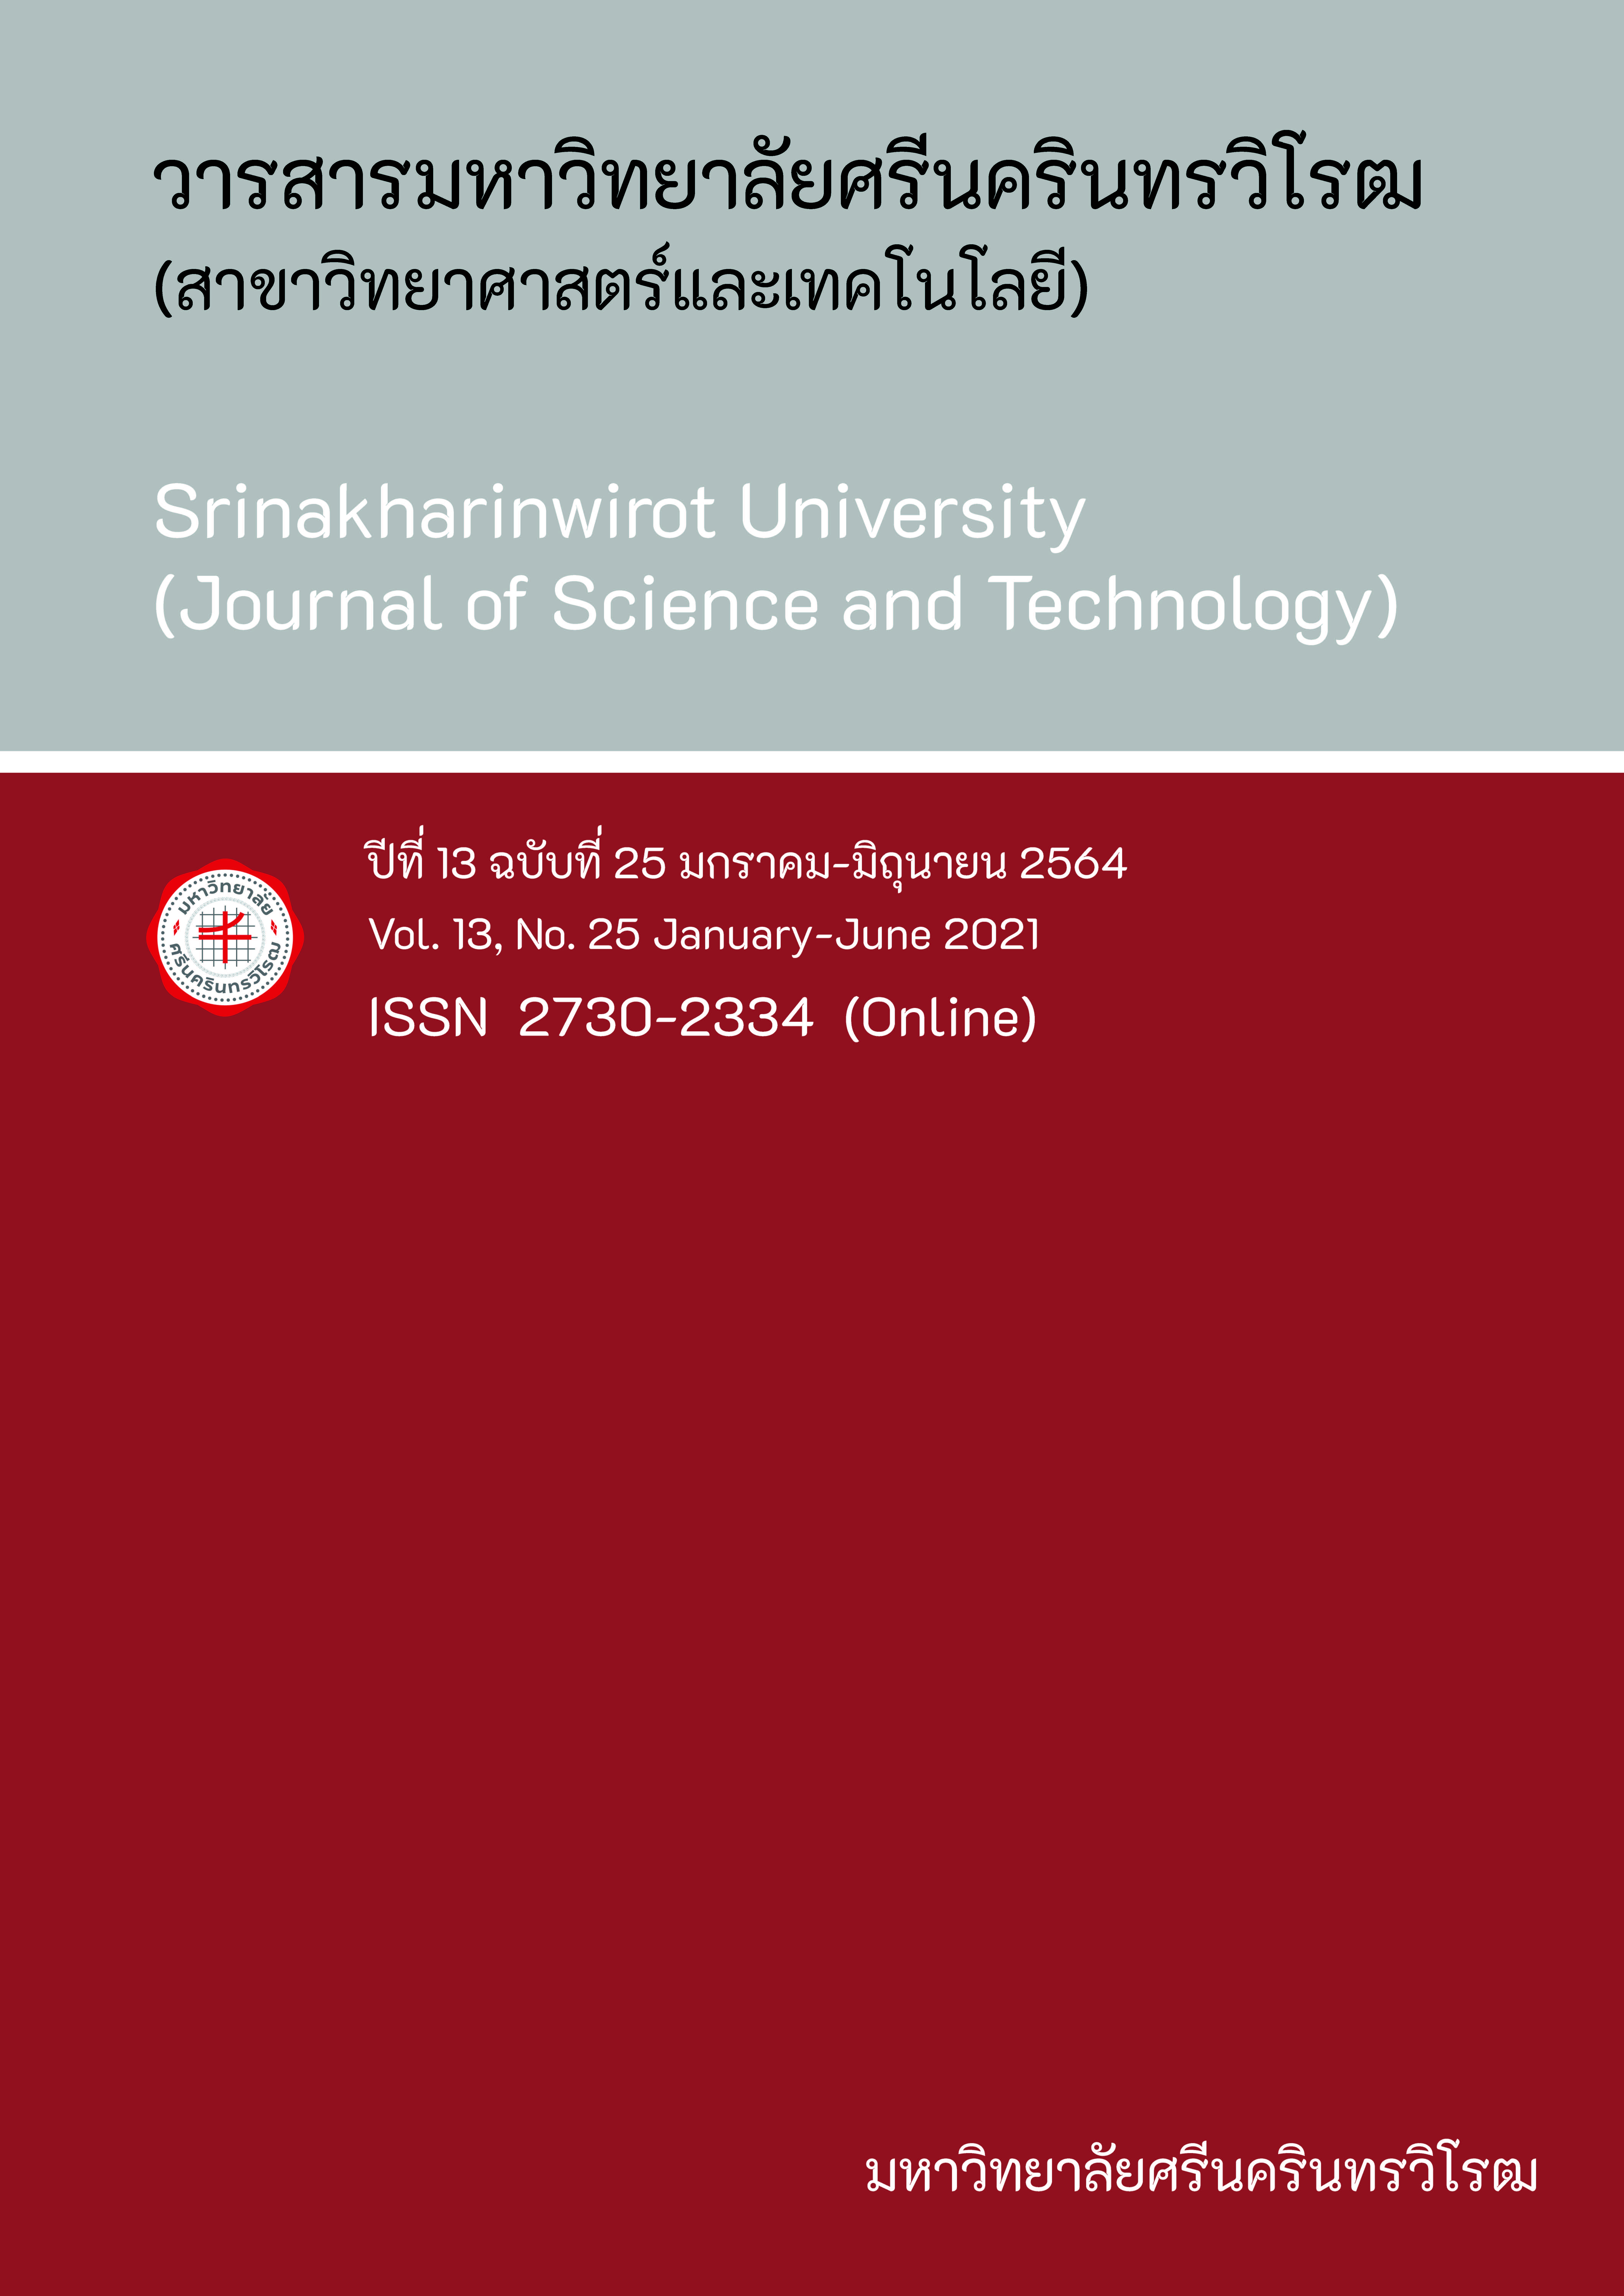 					View Vol. 13 No. 25, January-June (2021): Srinakharinwirot University (Journal of Science and Technology)
				